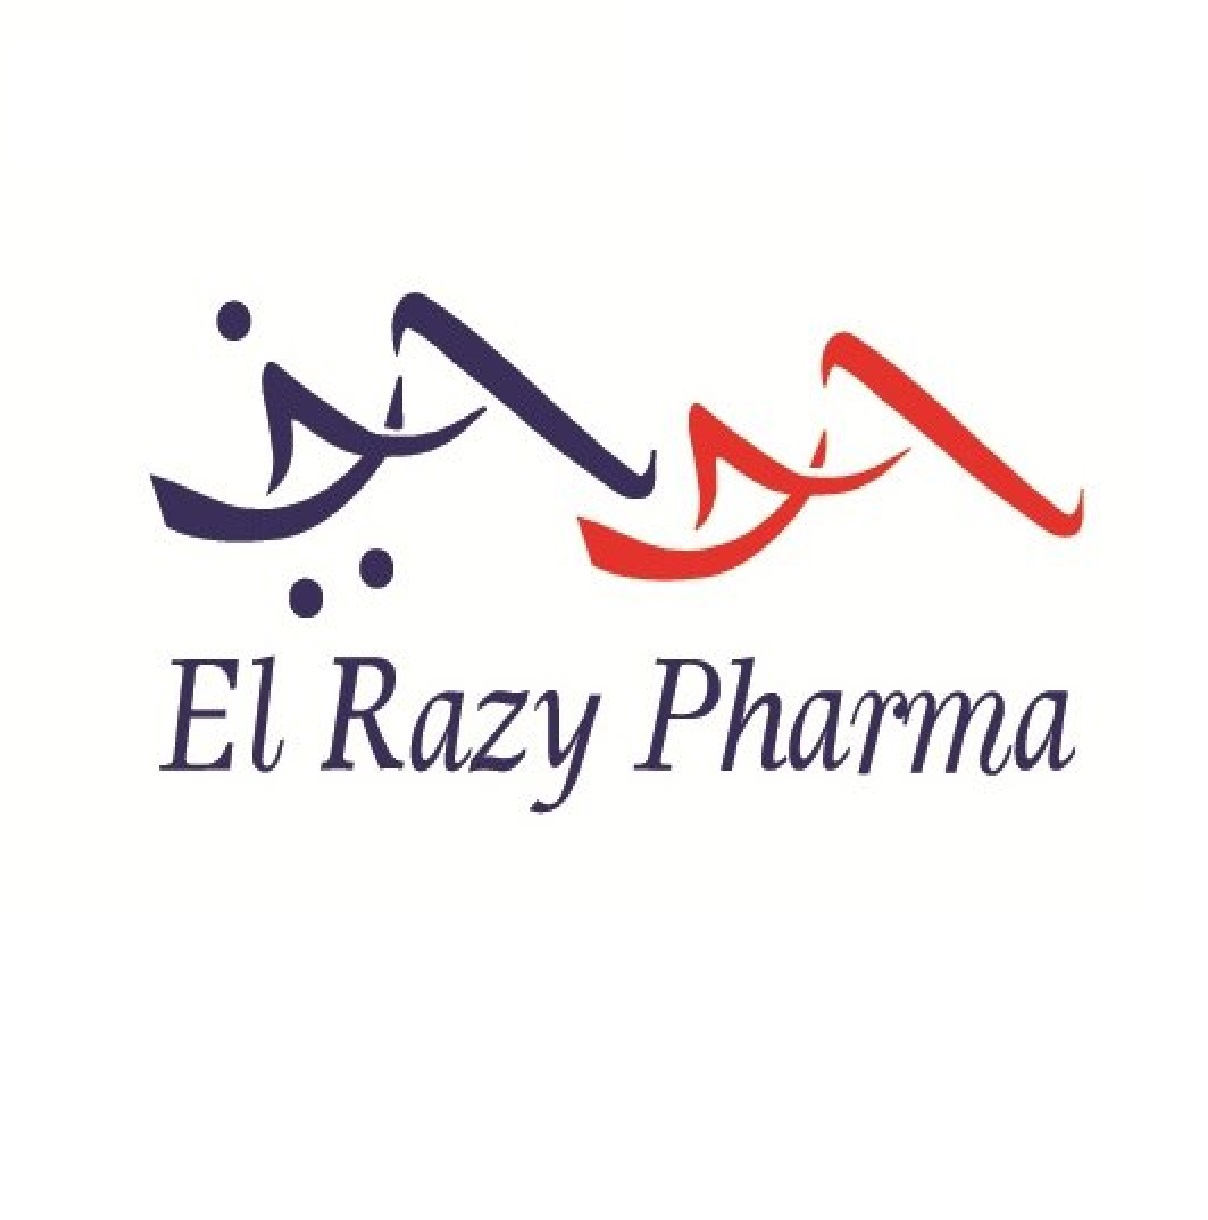 Elrazy pharma